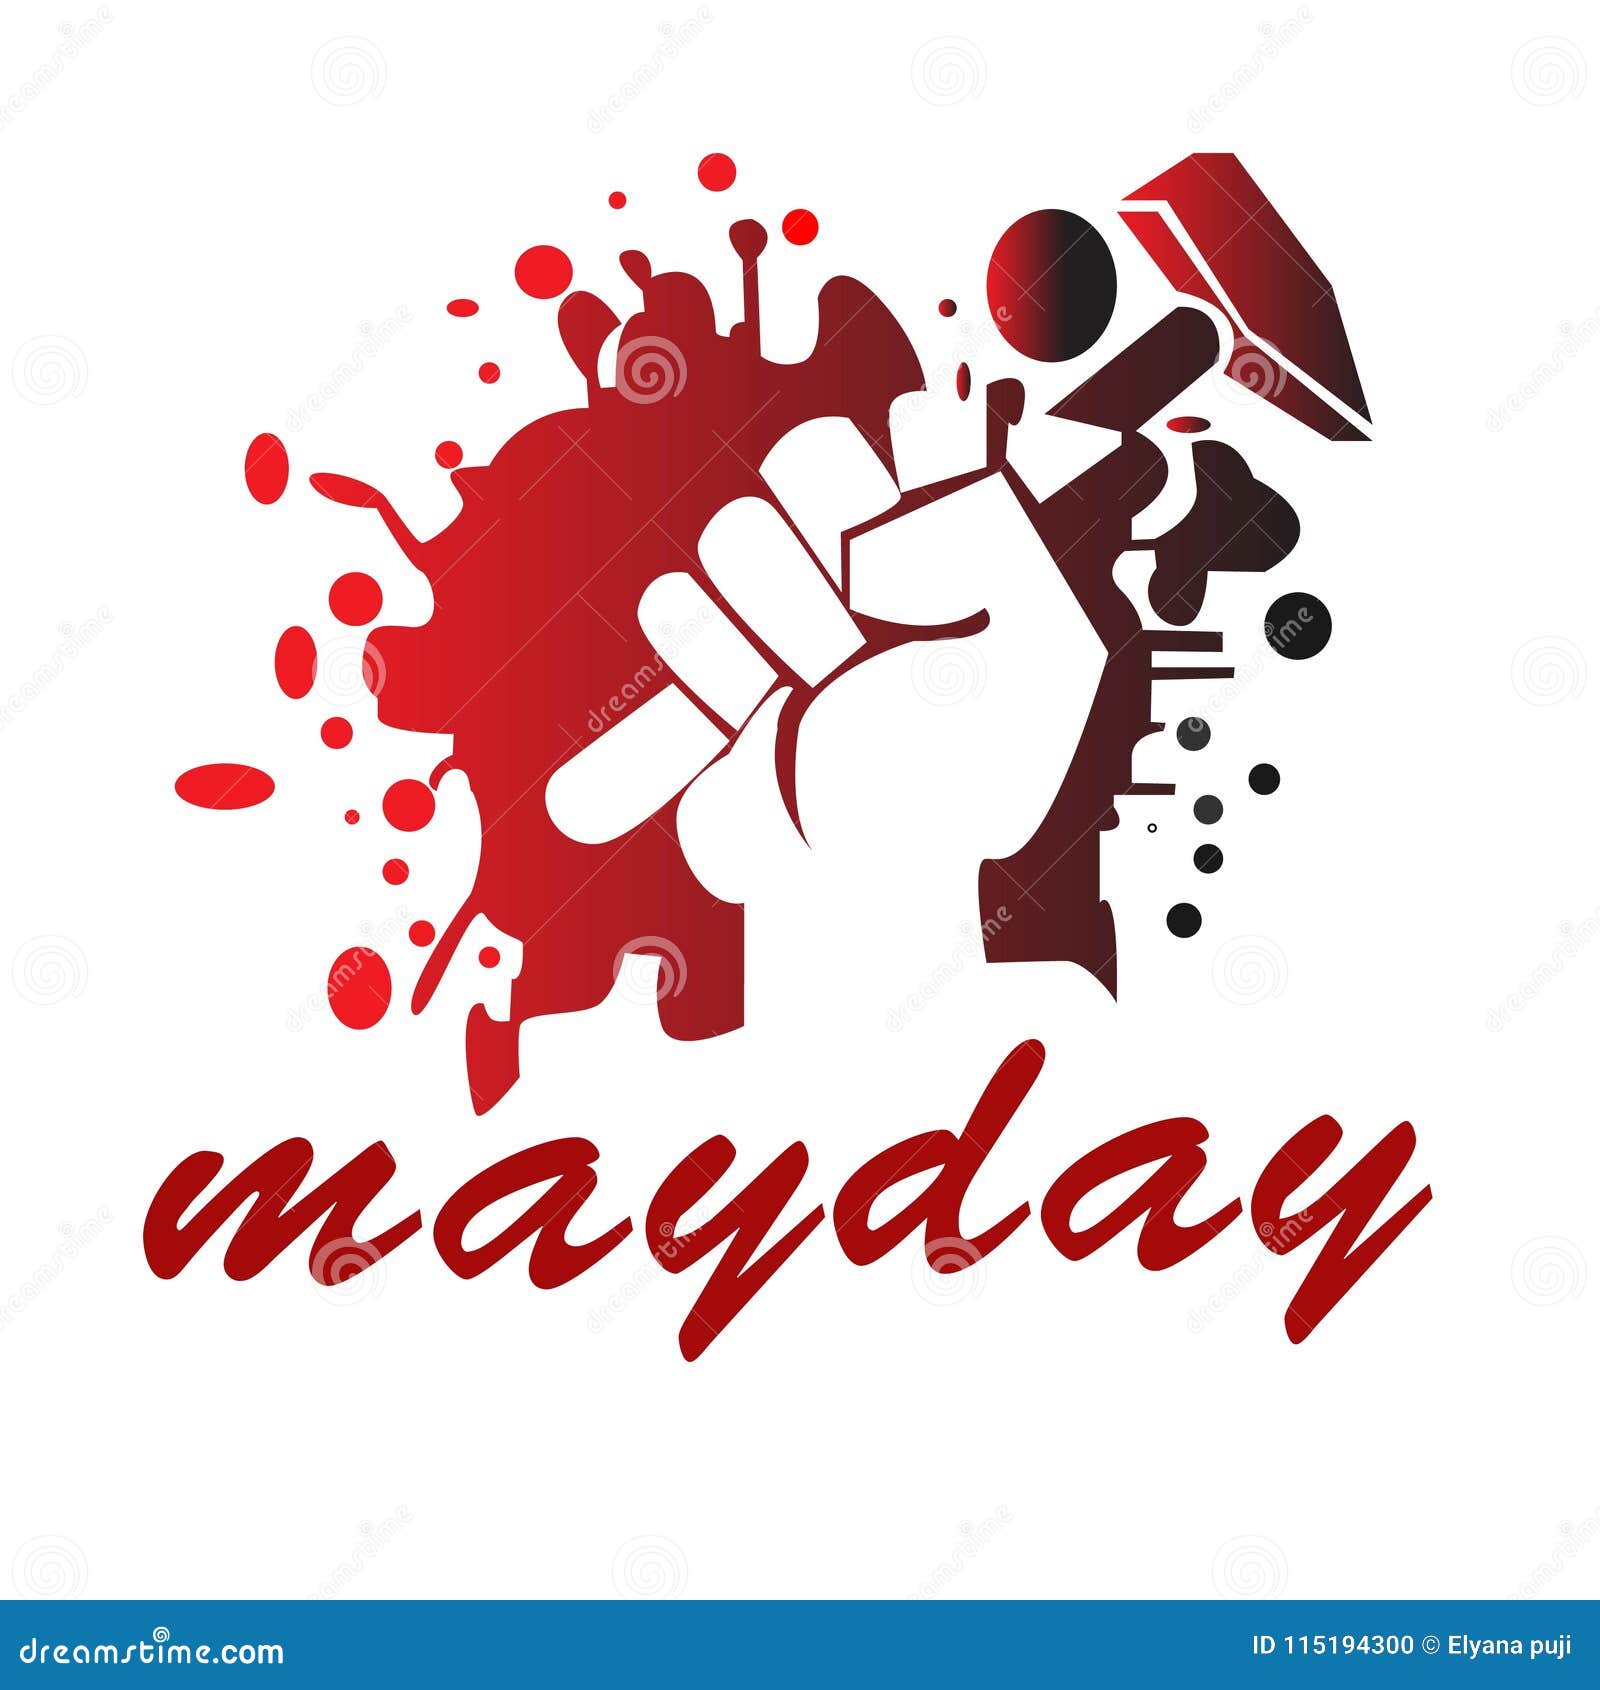 Mayday illustration vector stock vector. Illustration of event - 115194300